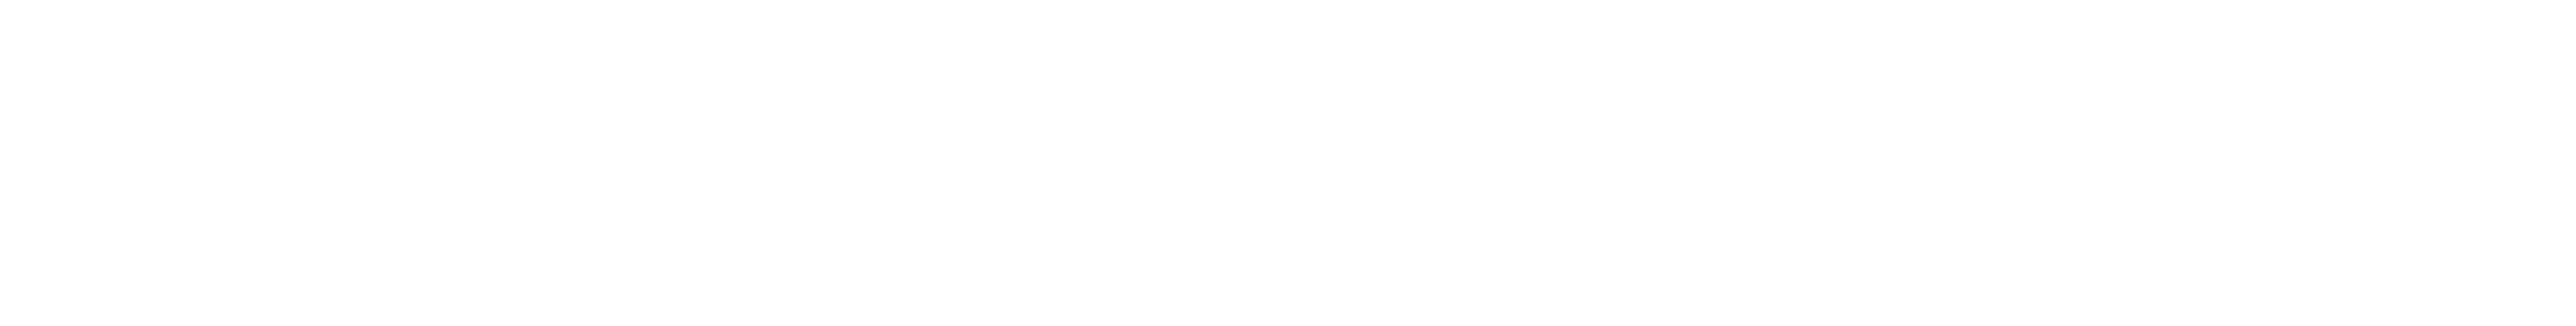 Prototype value-based health care logo